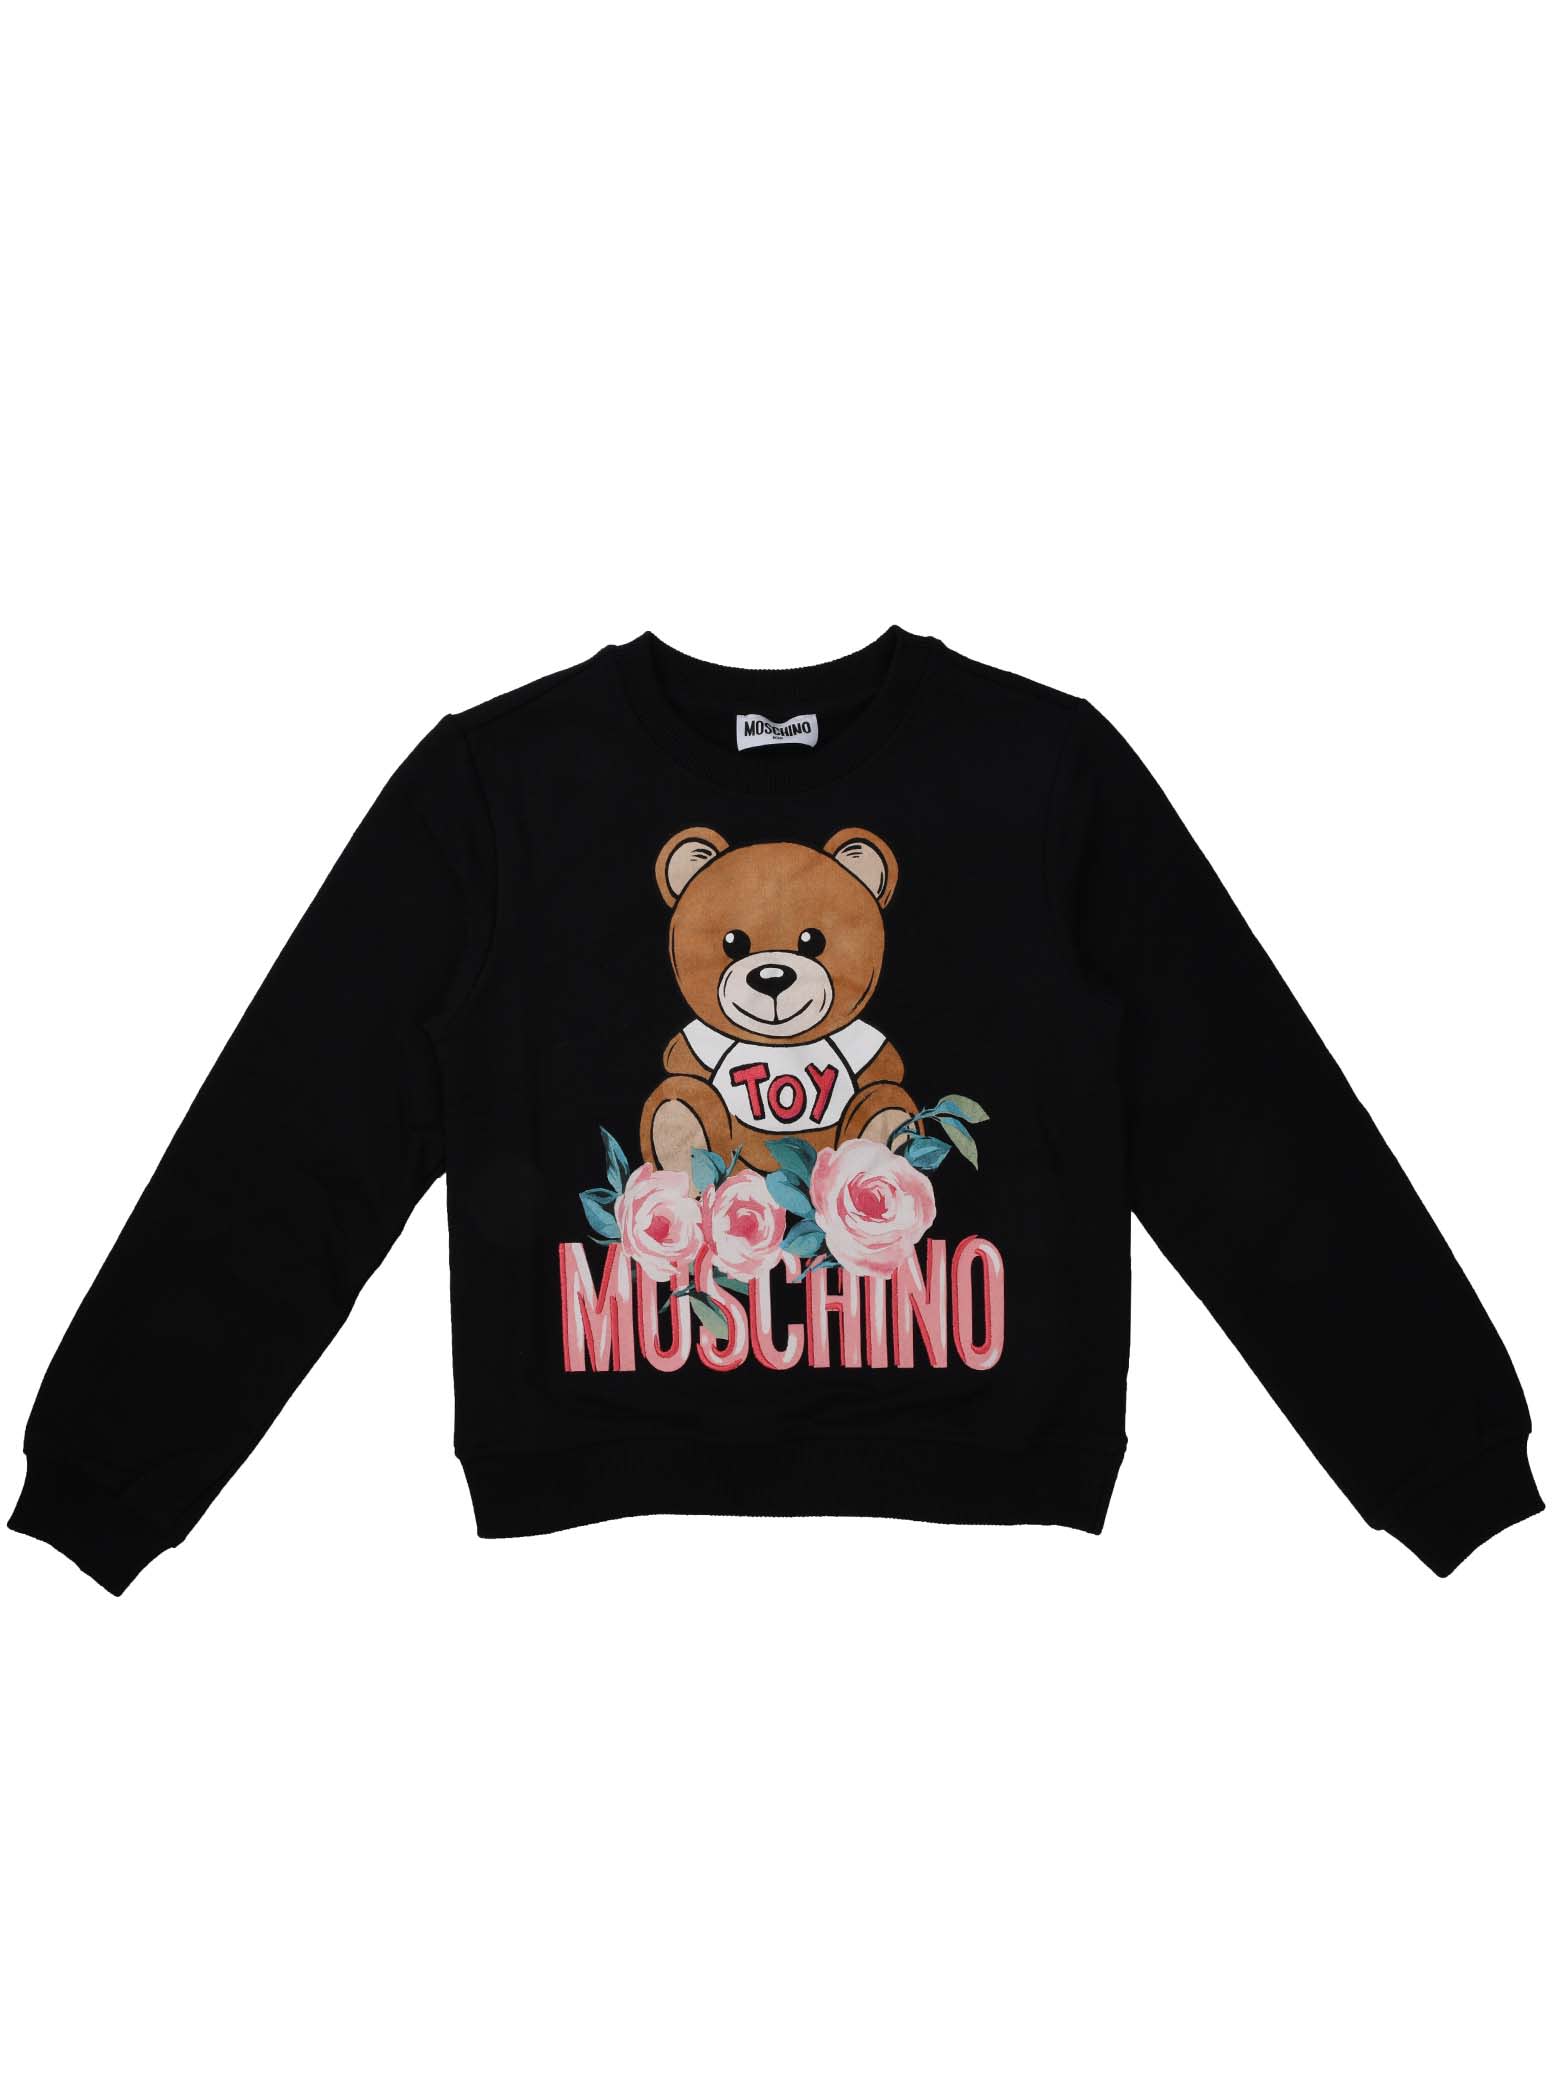 Moschino Black Crew Neck Sweatshirt With Bear Print